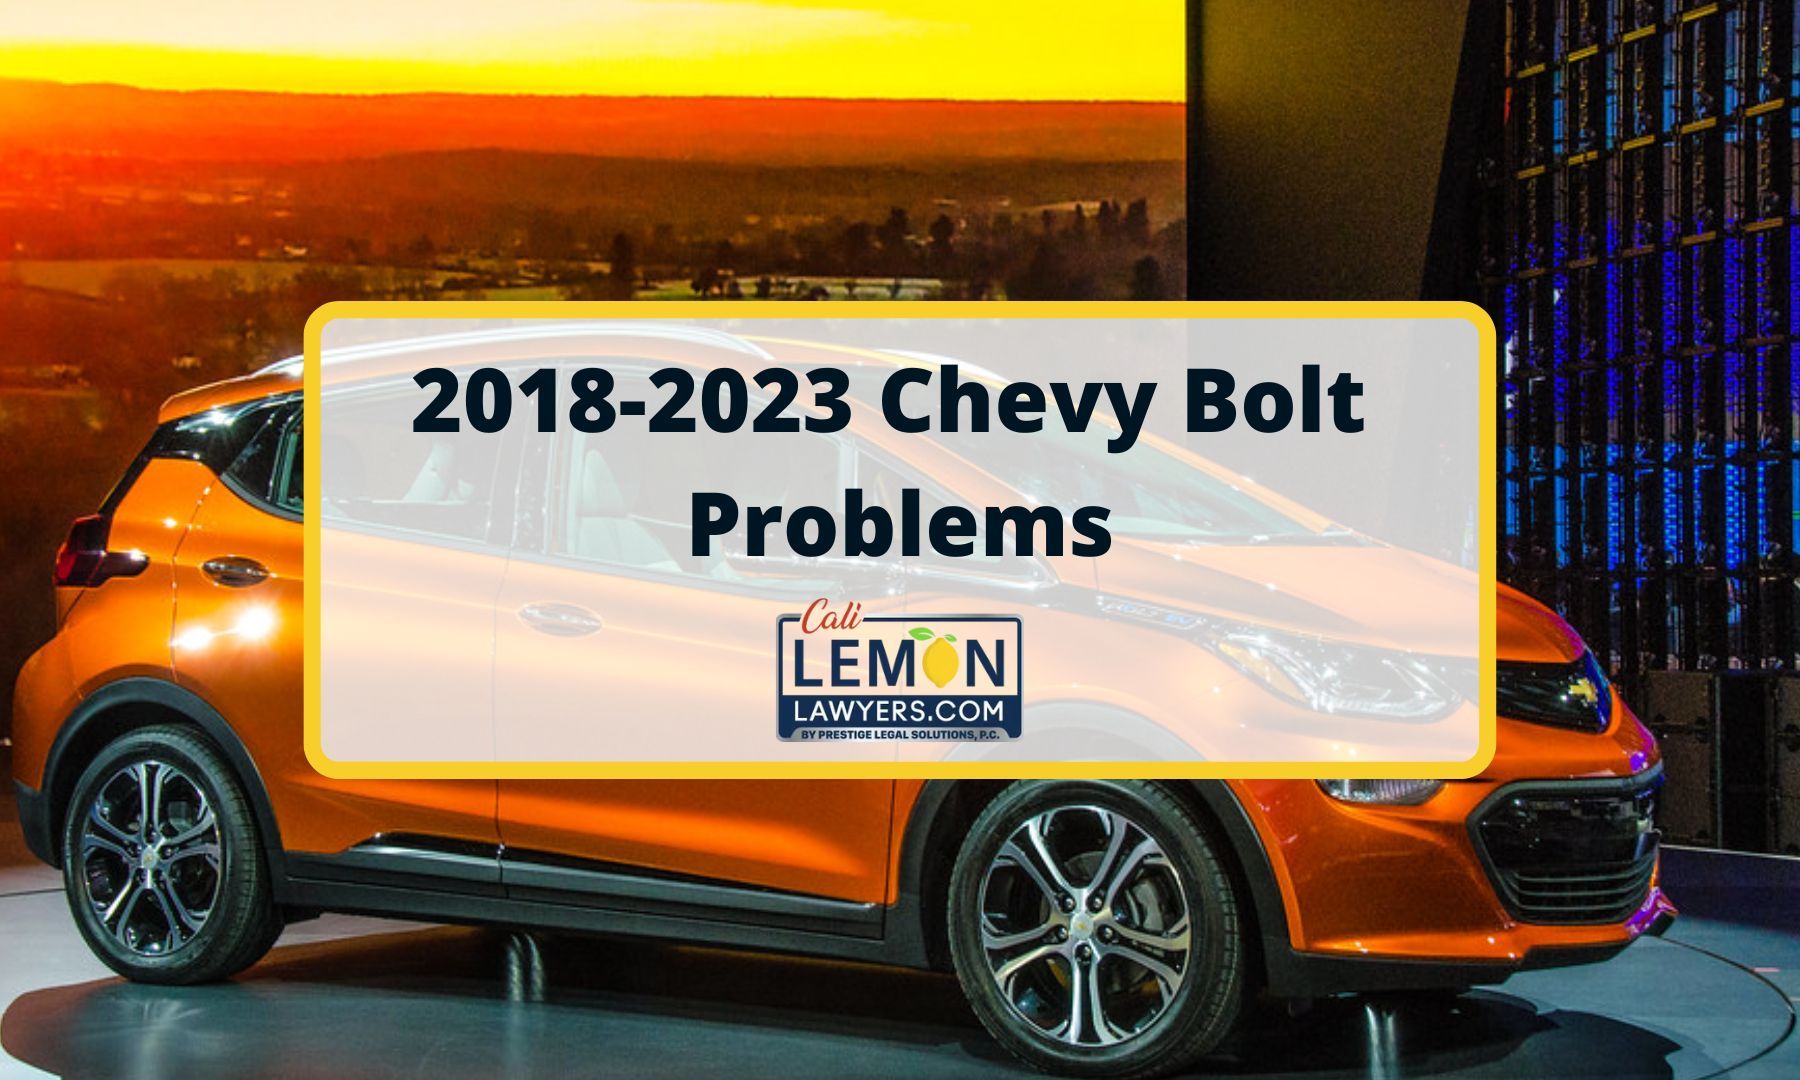 2018-2023 Chevy Bolt Problems